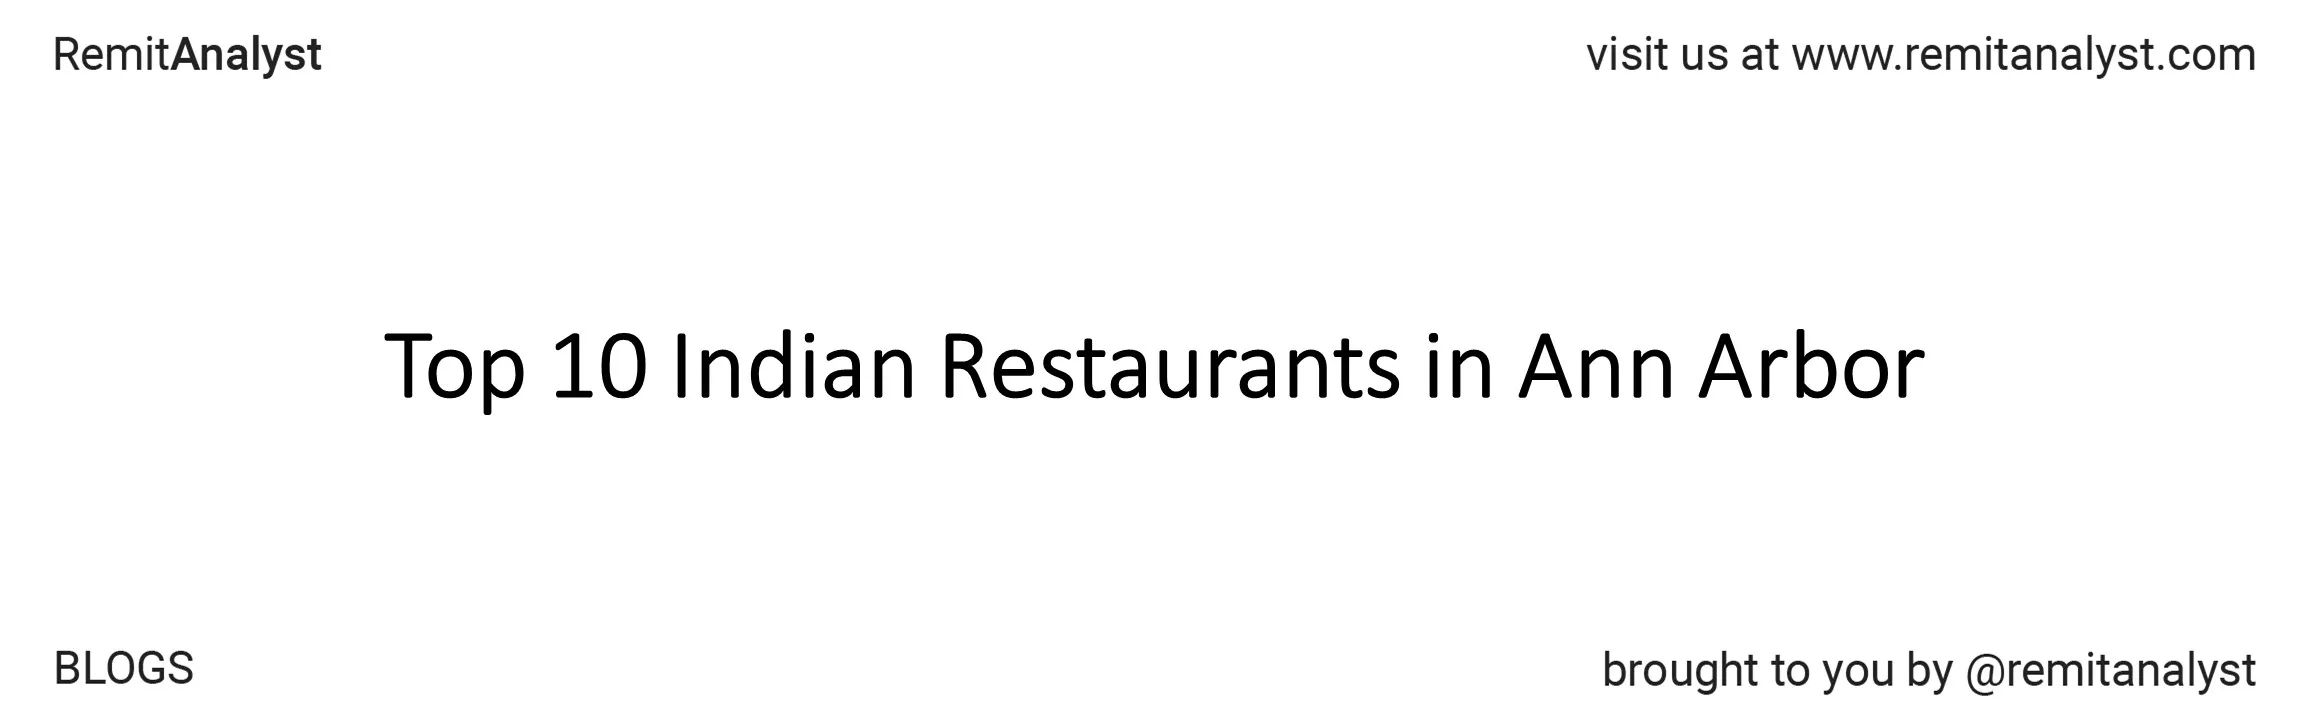 top-10-indian-restaurants-in-ann-arbor-title